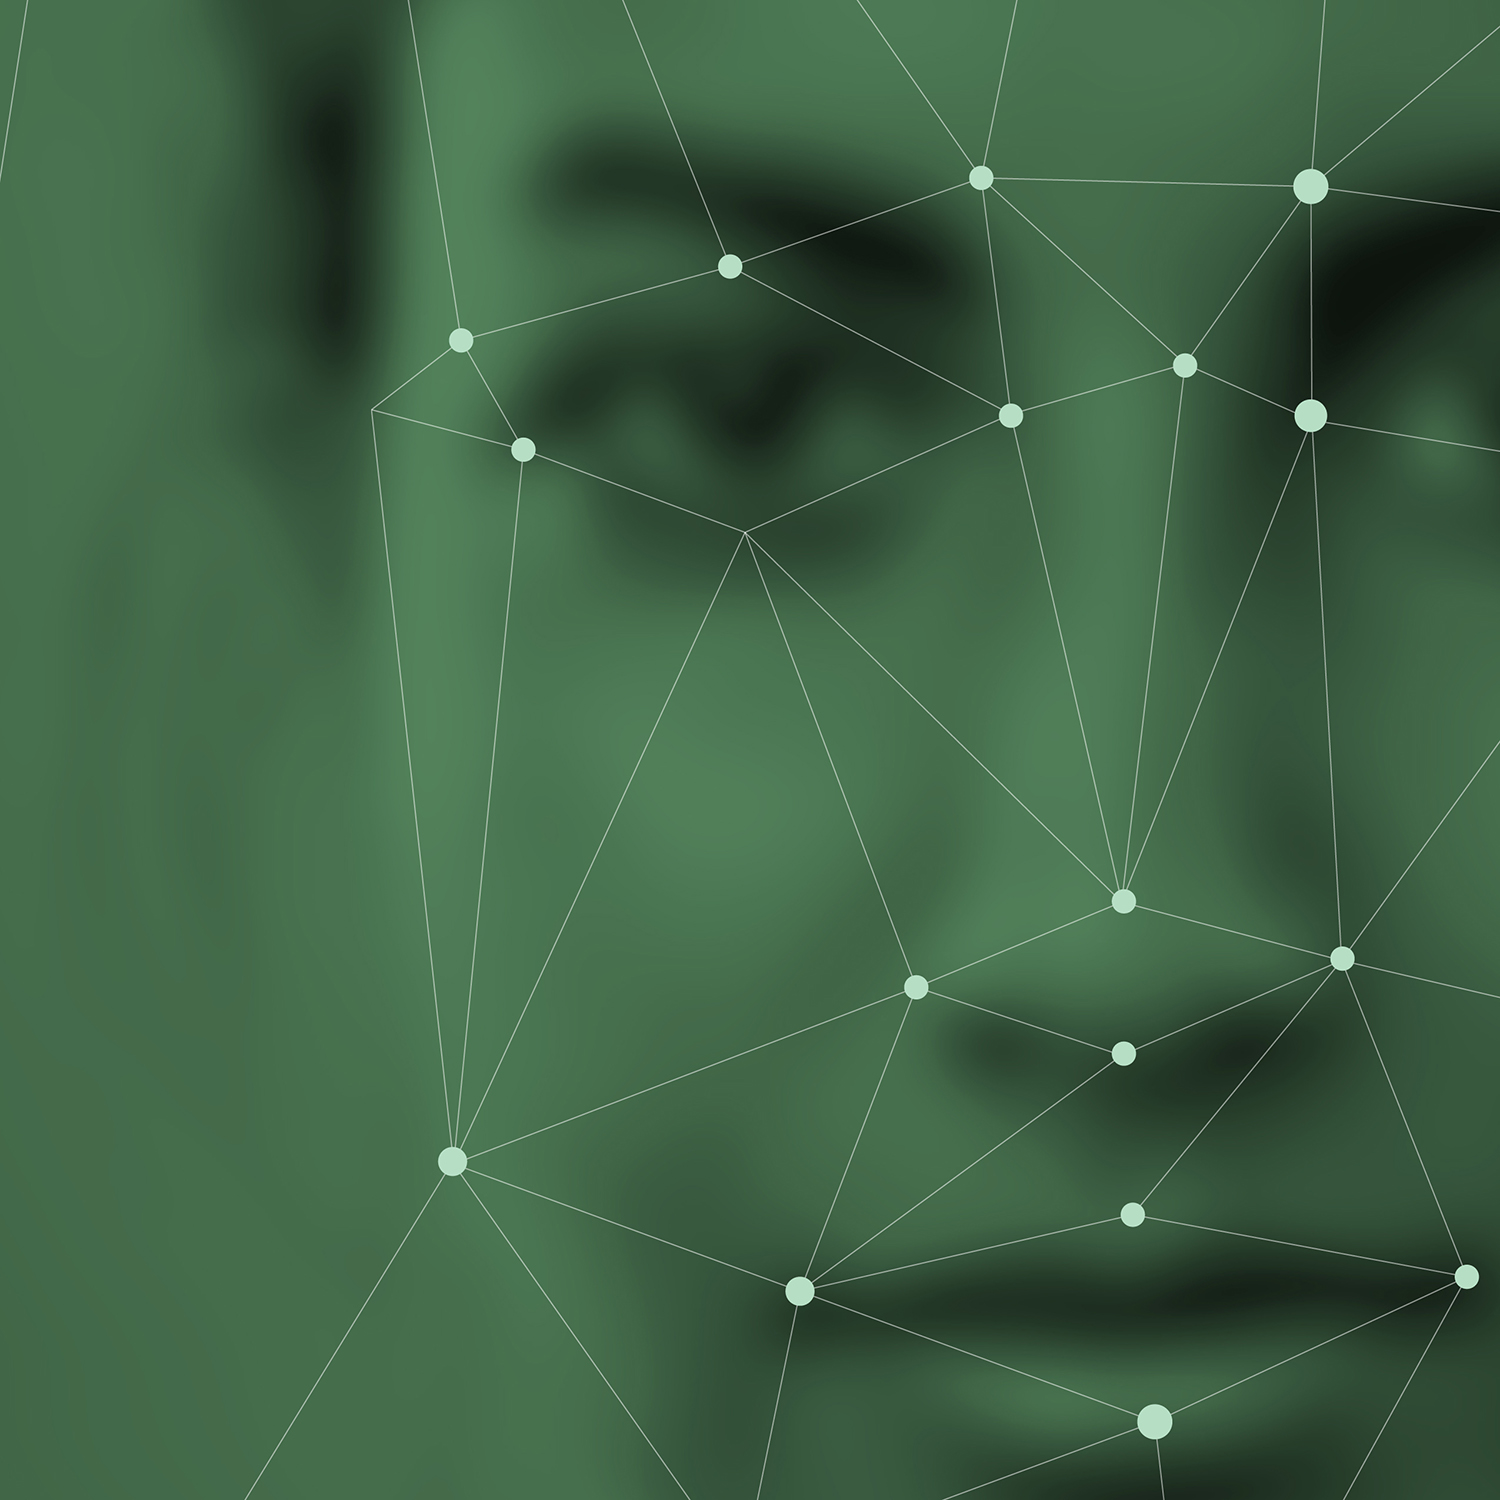 Image in a green motif of transparent digital vectors over a woman's face.